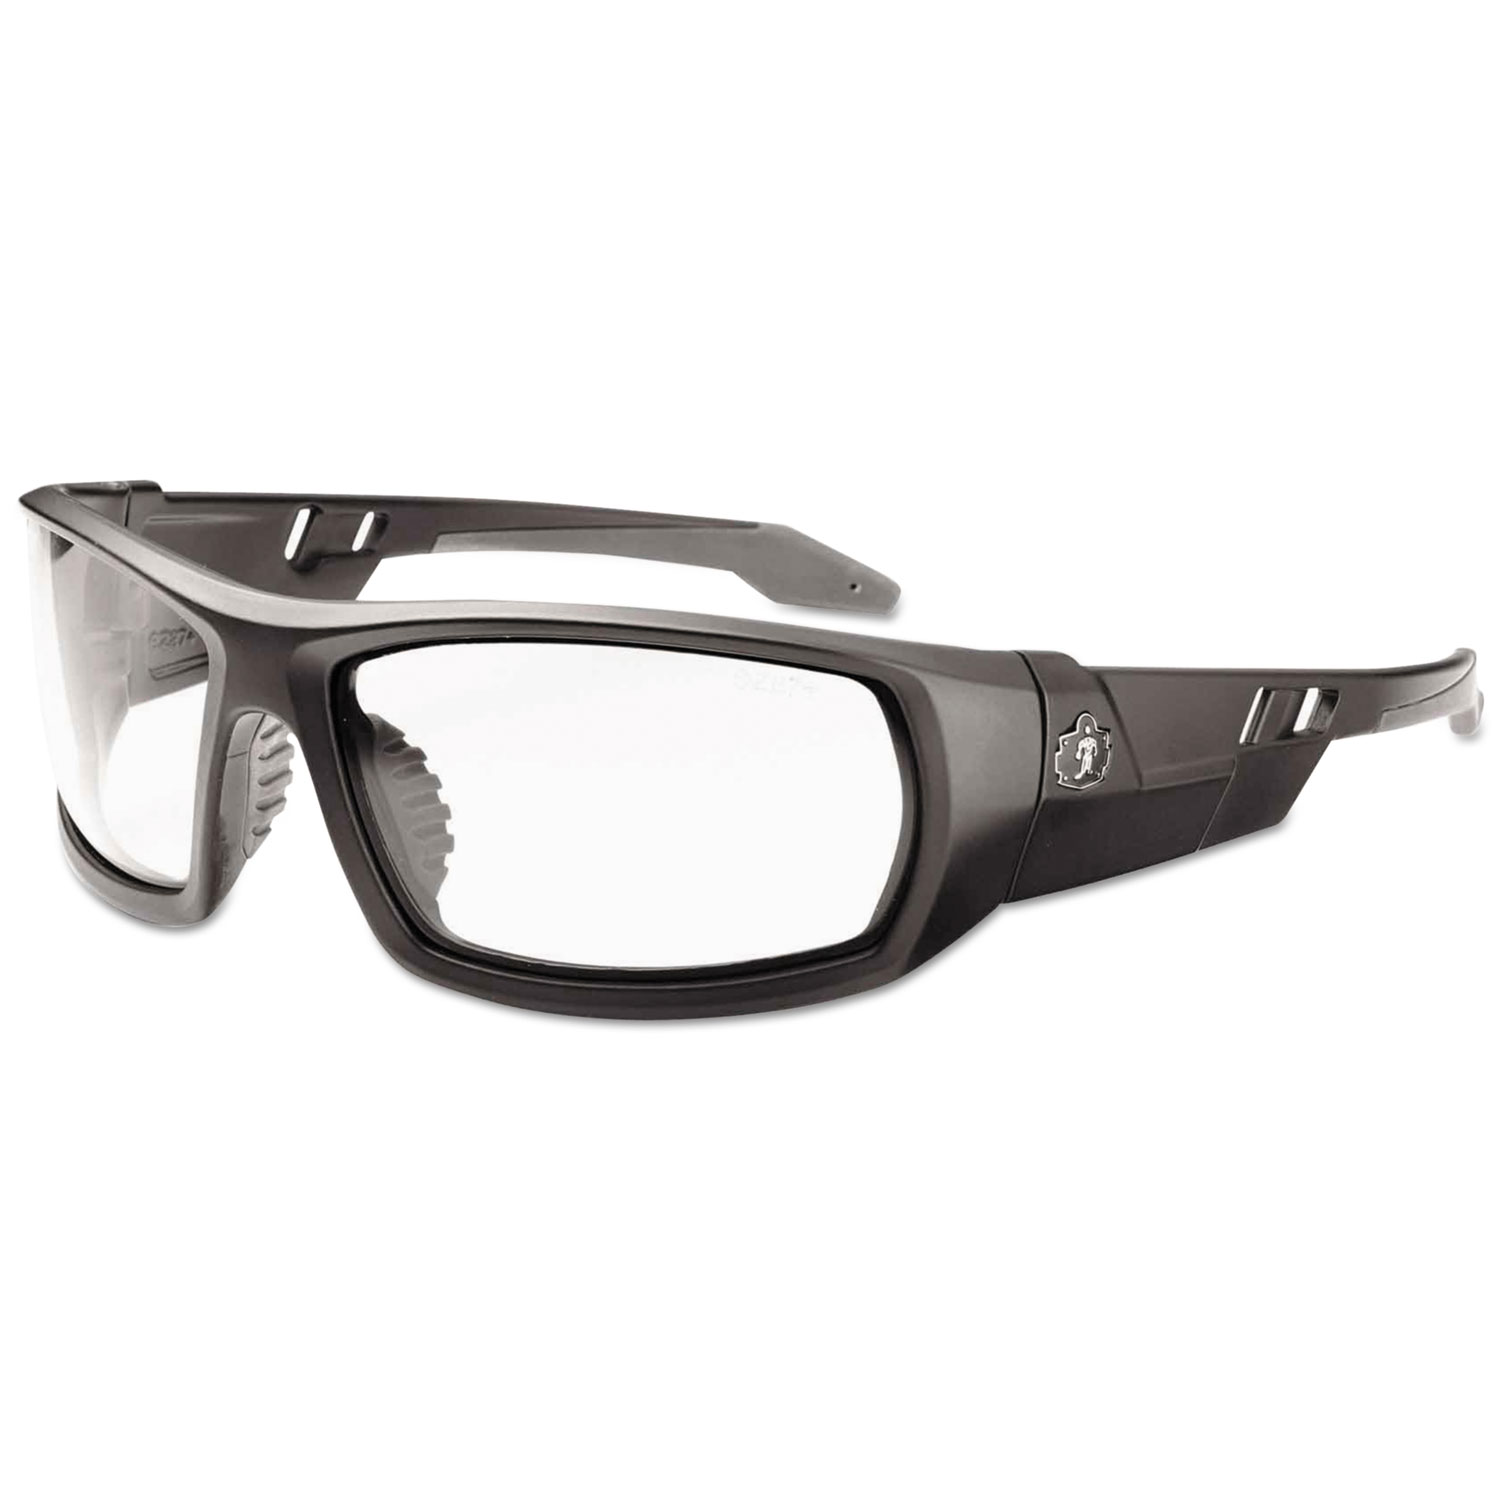  ergodyne 50400 Skullerz Odin Safety Glasses, Matte Black Frame/Clear Lens, Nylon/Polycarb (EGO50400) 